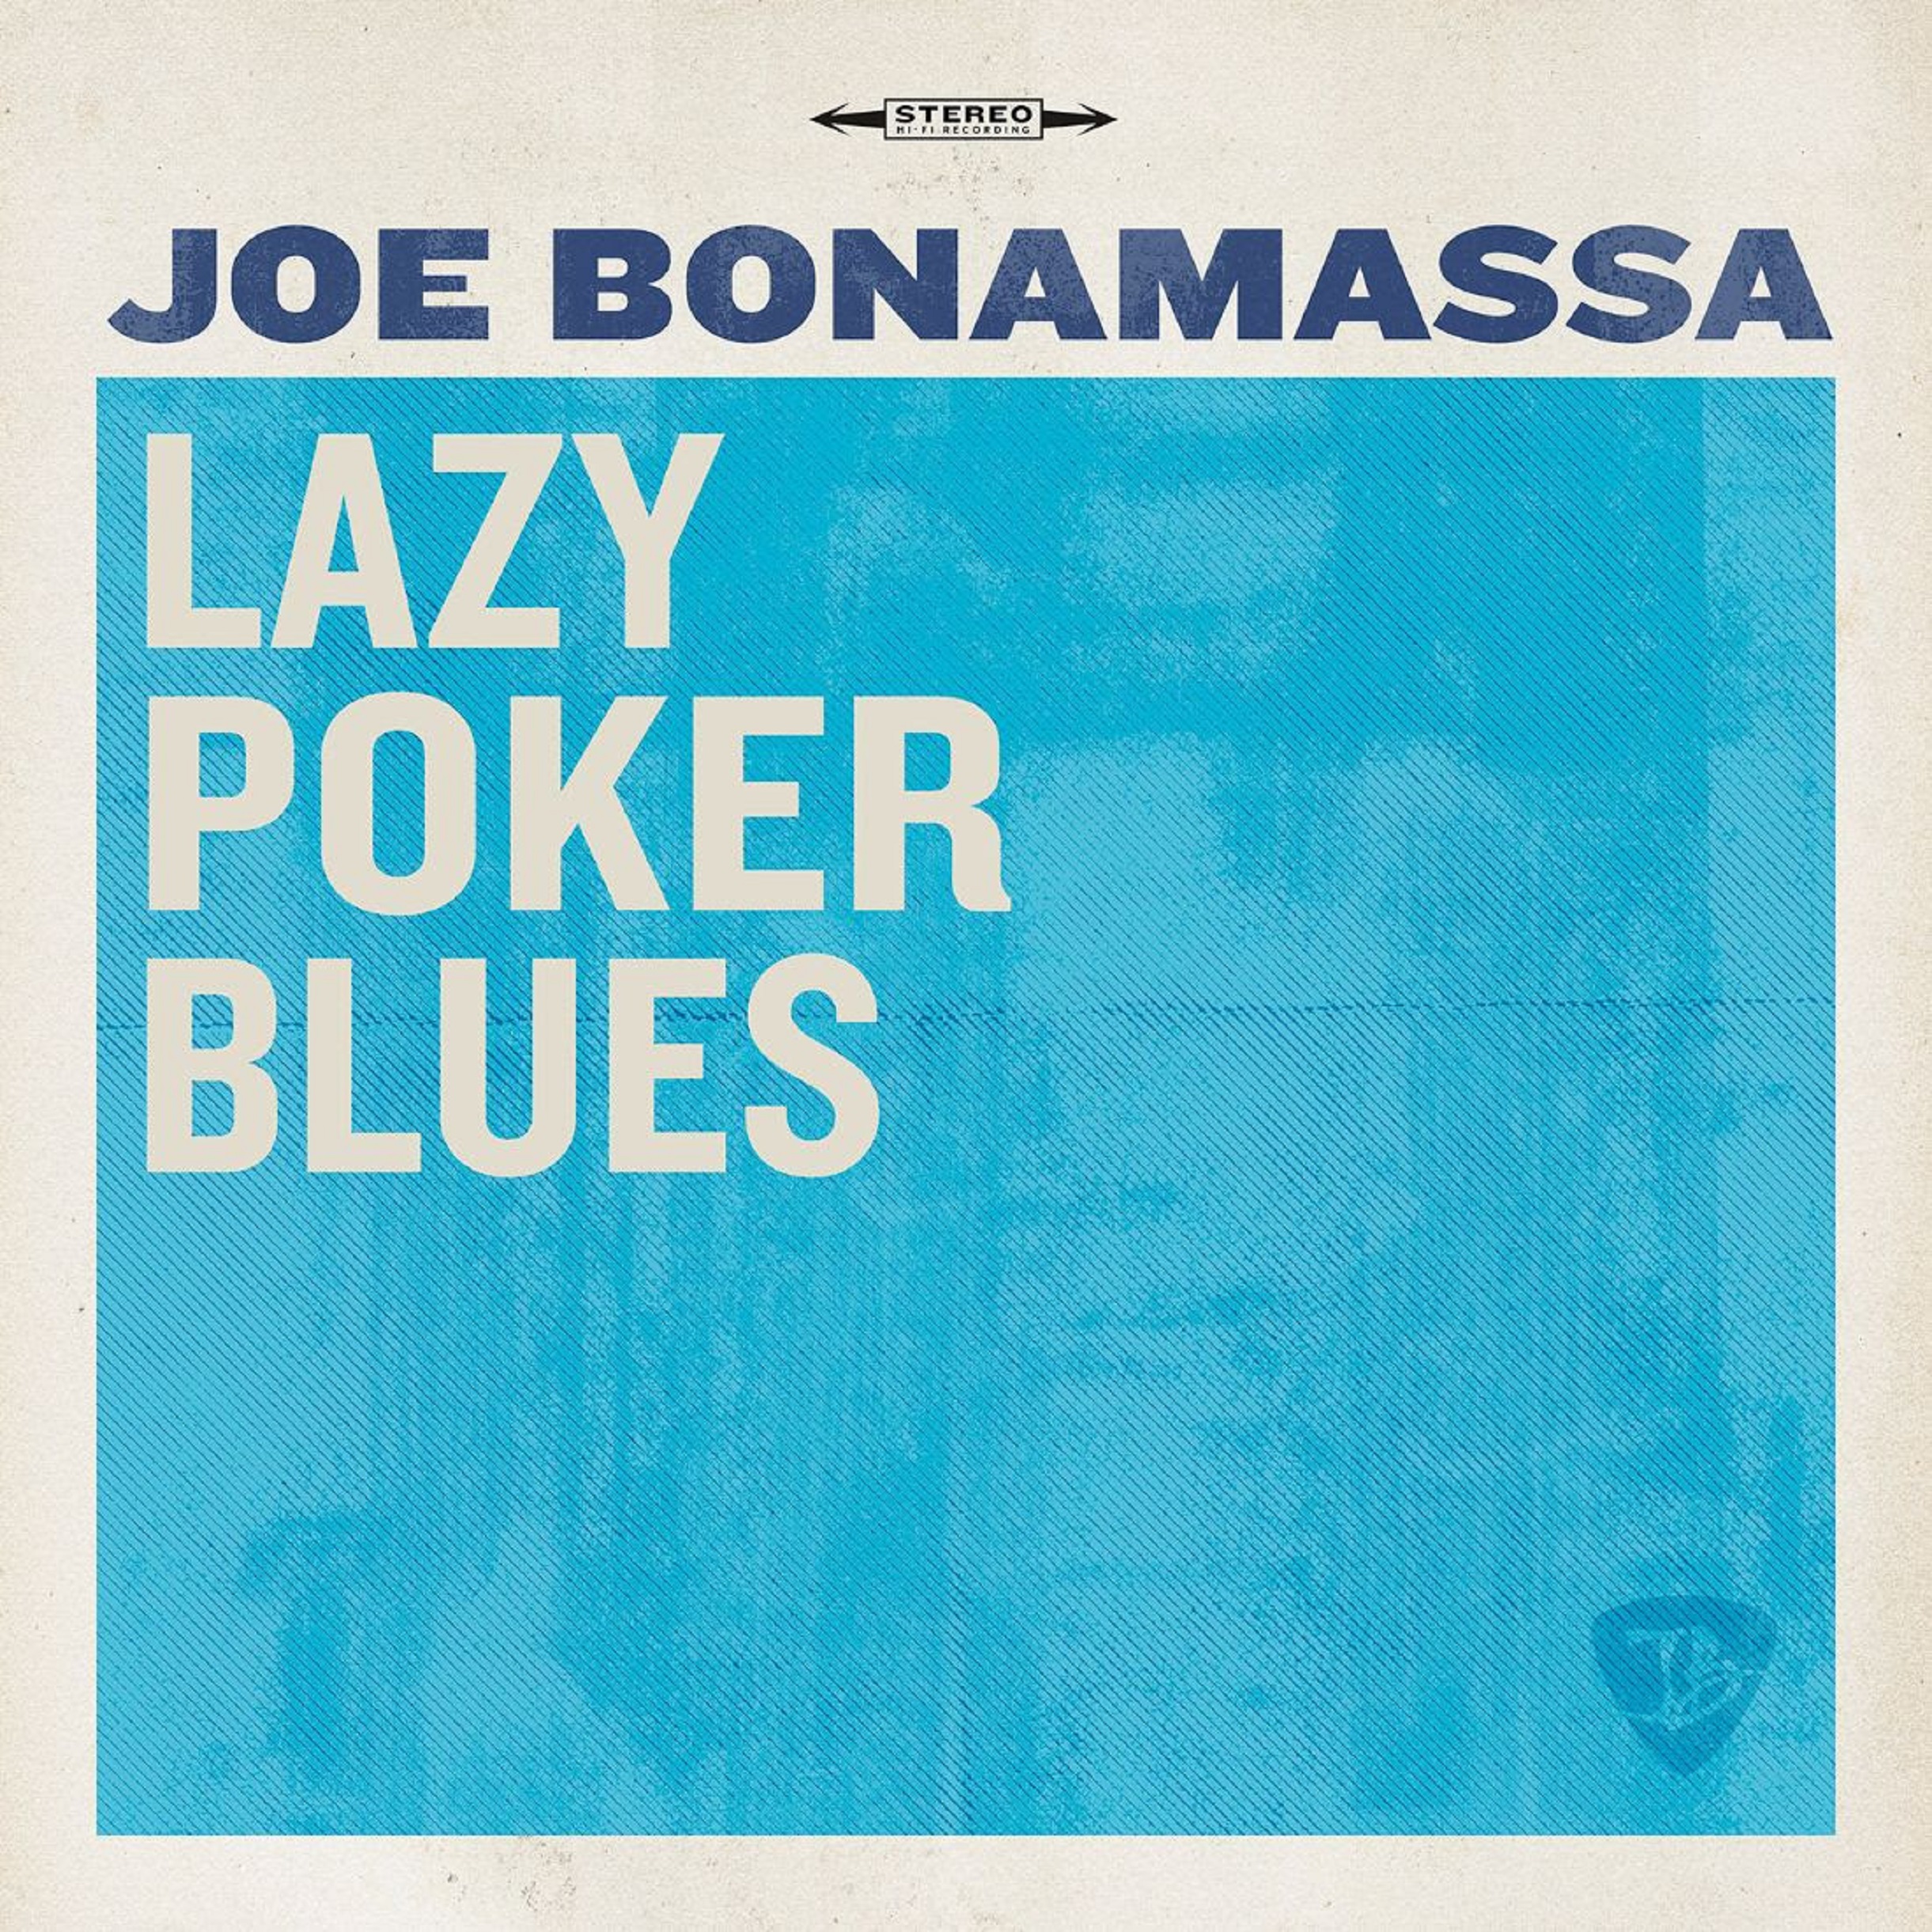 Joe Bonamassa Reignites Fleetwood Mac's "Lazy Poker Blues"